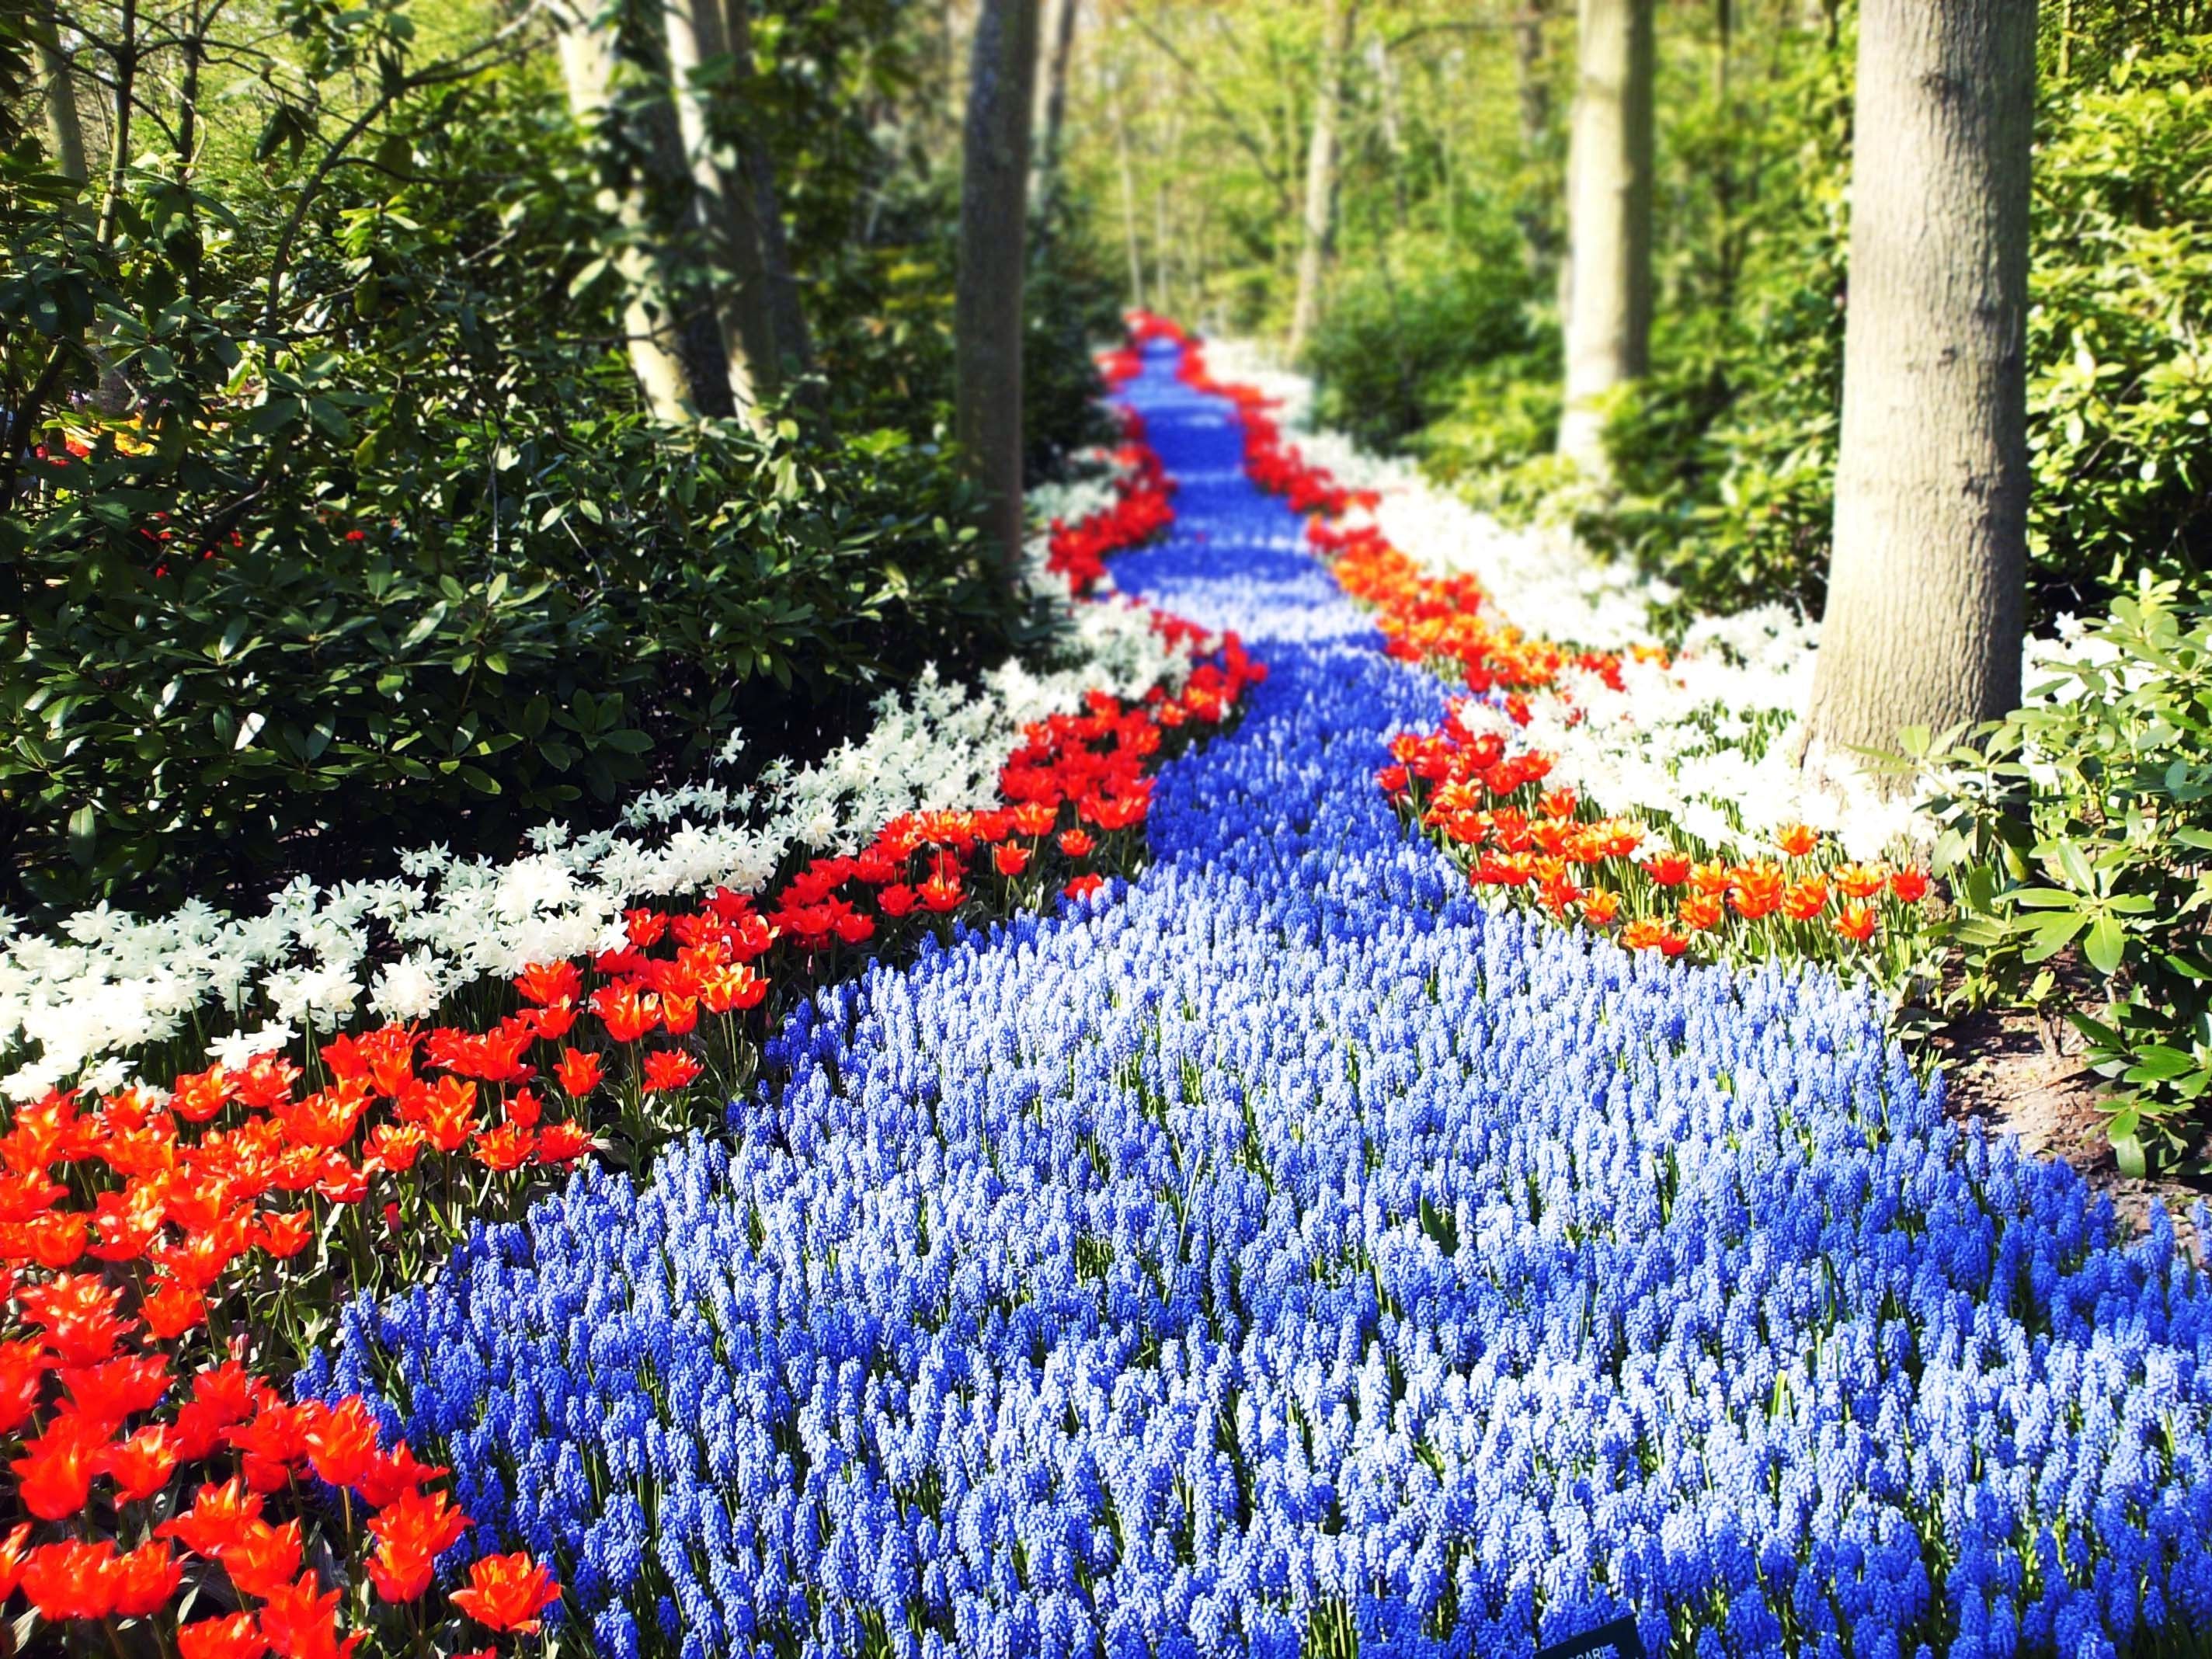 Field of Tulips, Island of Mainau, Germany загрузить